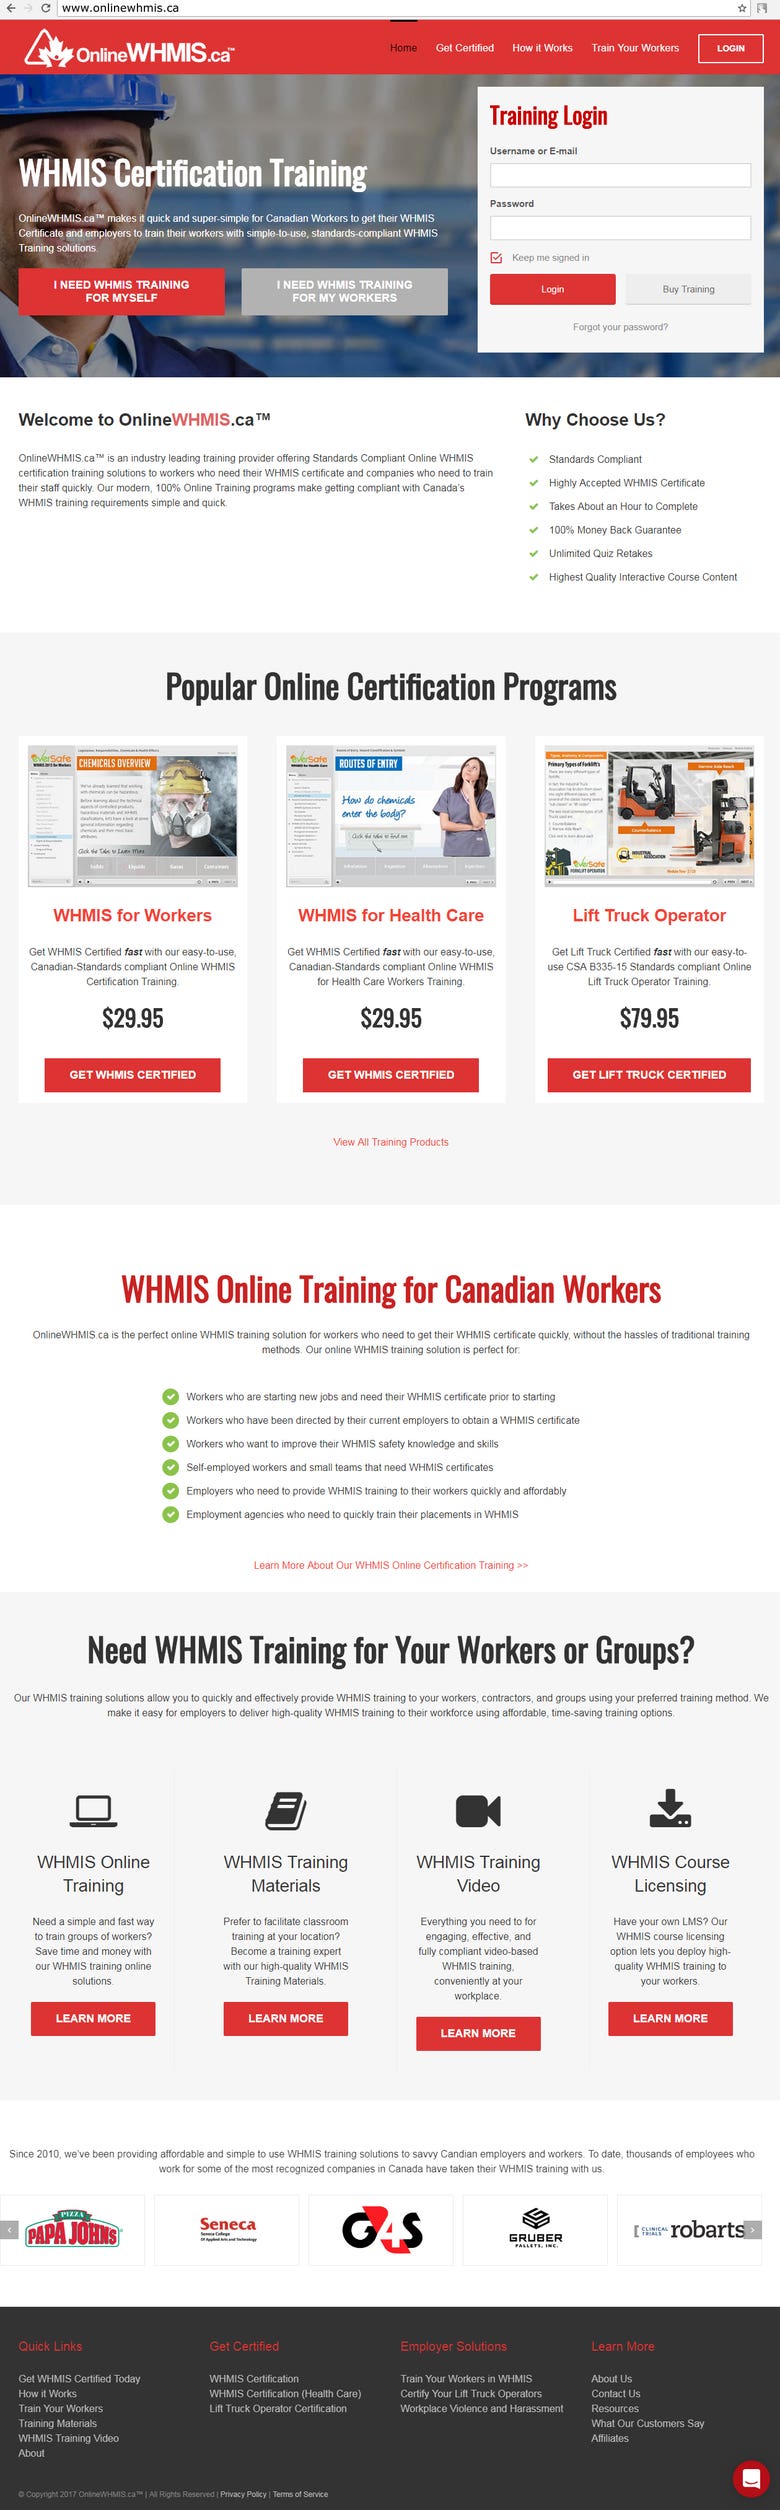 WHMIS Certification Training - Wordpress - WooCommerce